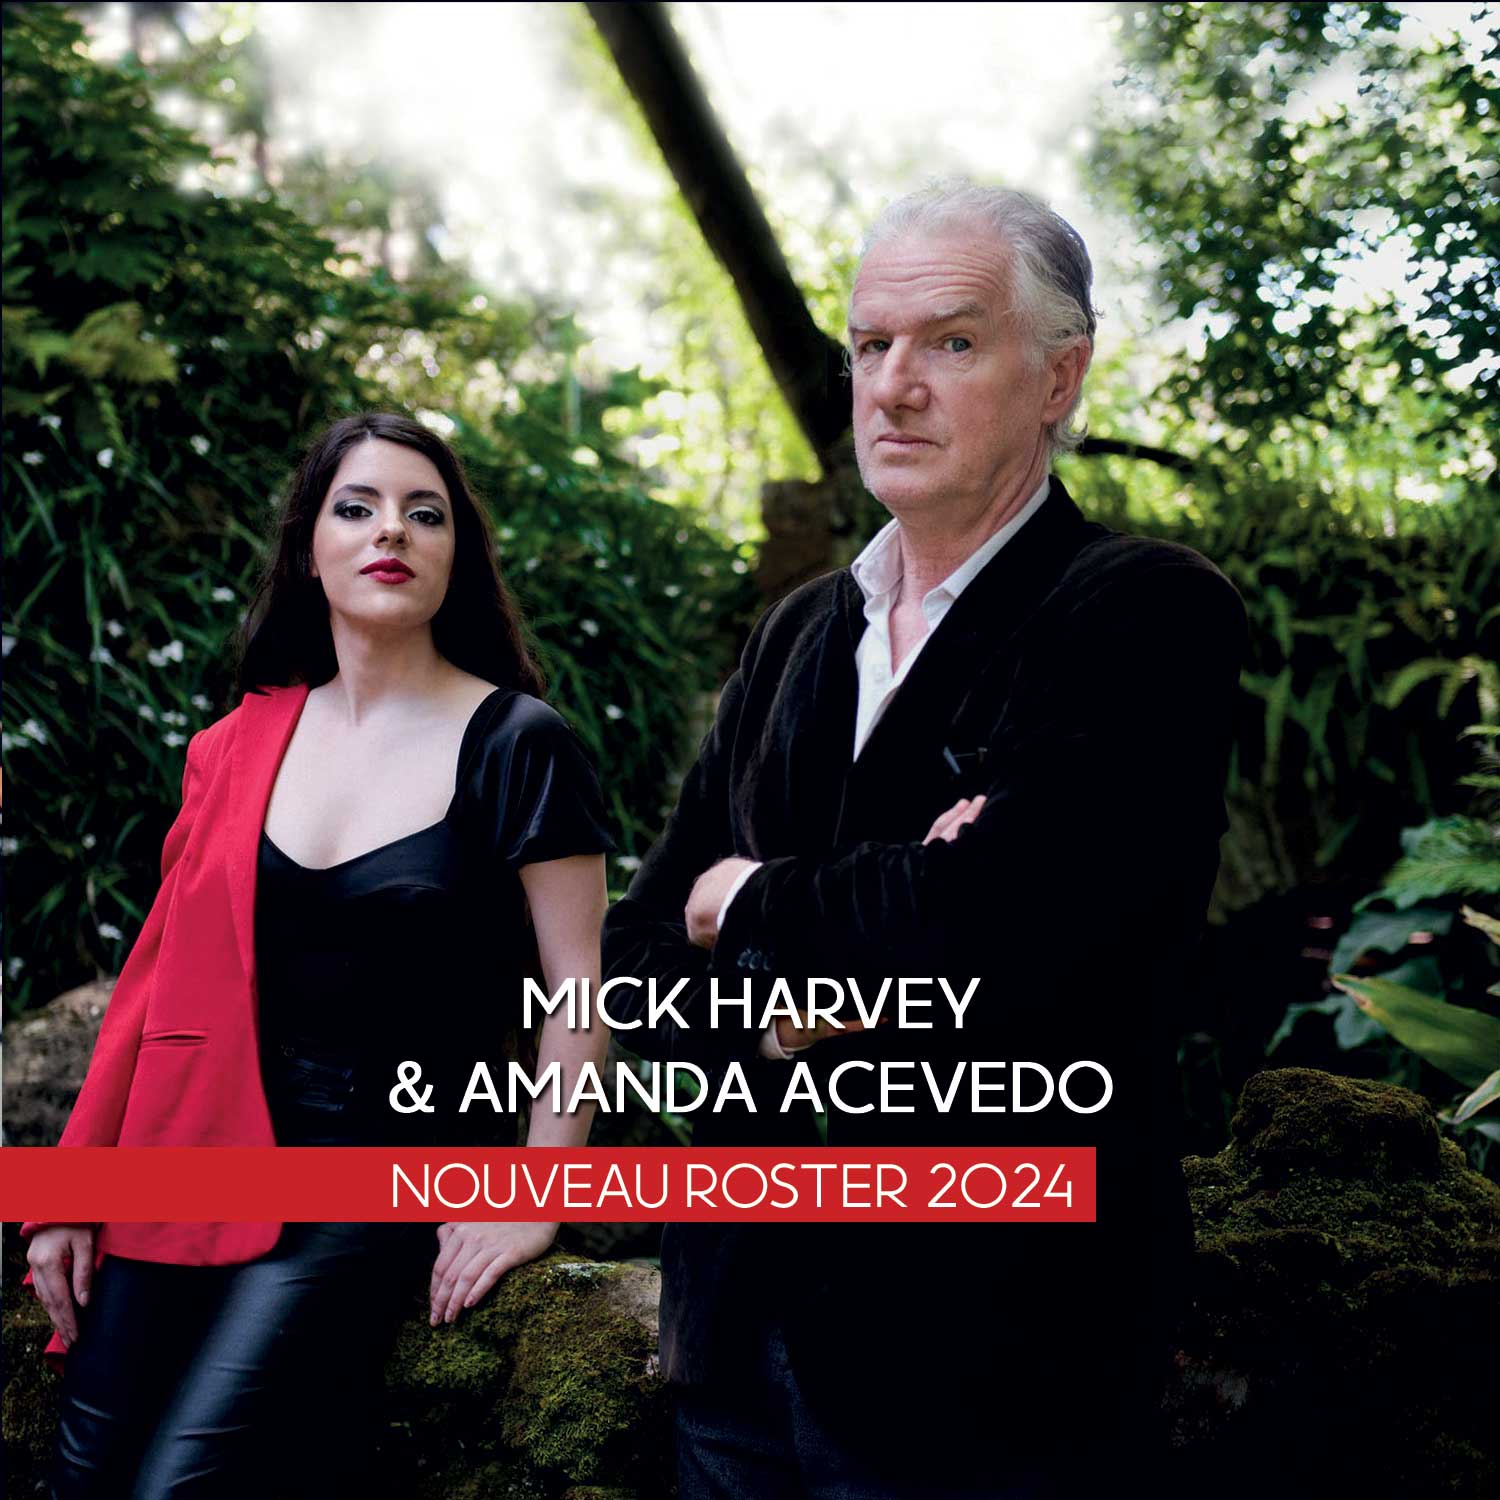 Mick Harvey & Amanda Acevedo